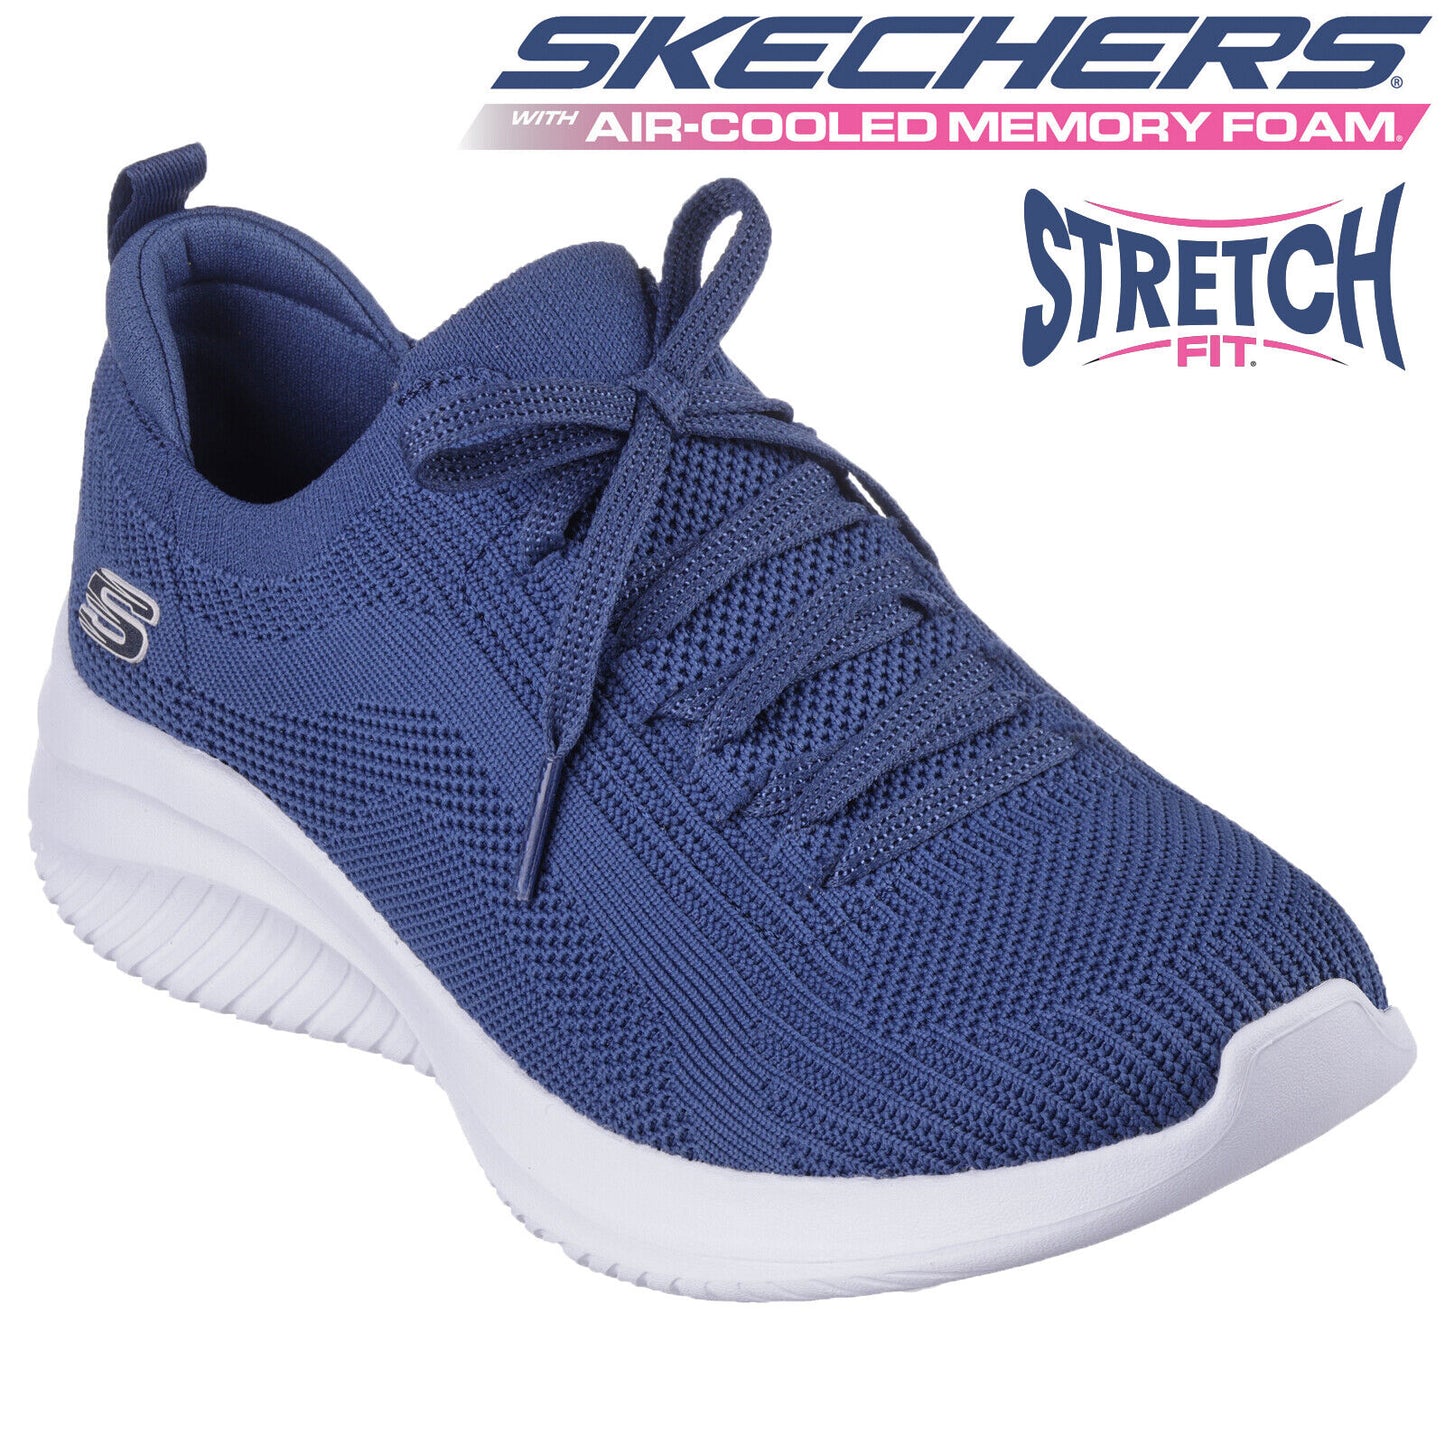 Skechers Ladies Ultra Flex 3.0 Big Plan Navy Vegan Slip On Trainers Shoes